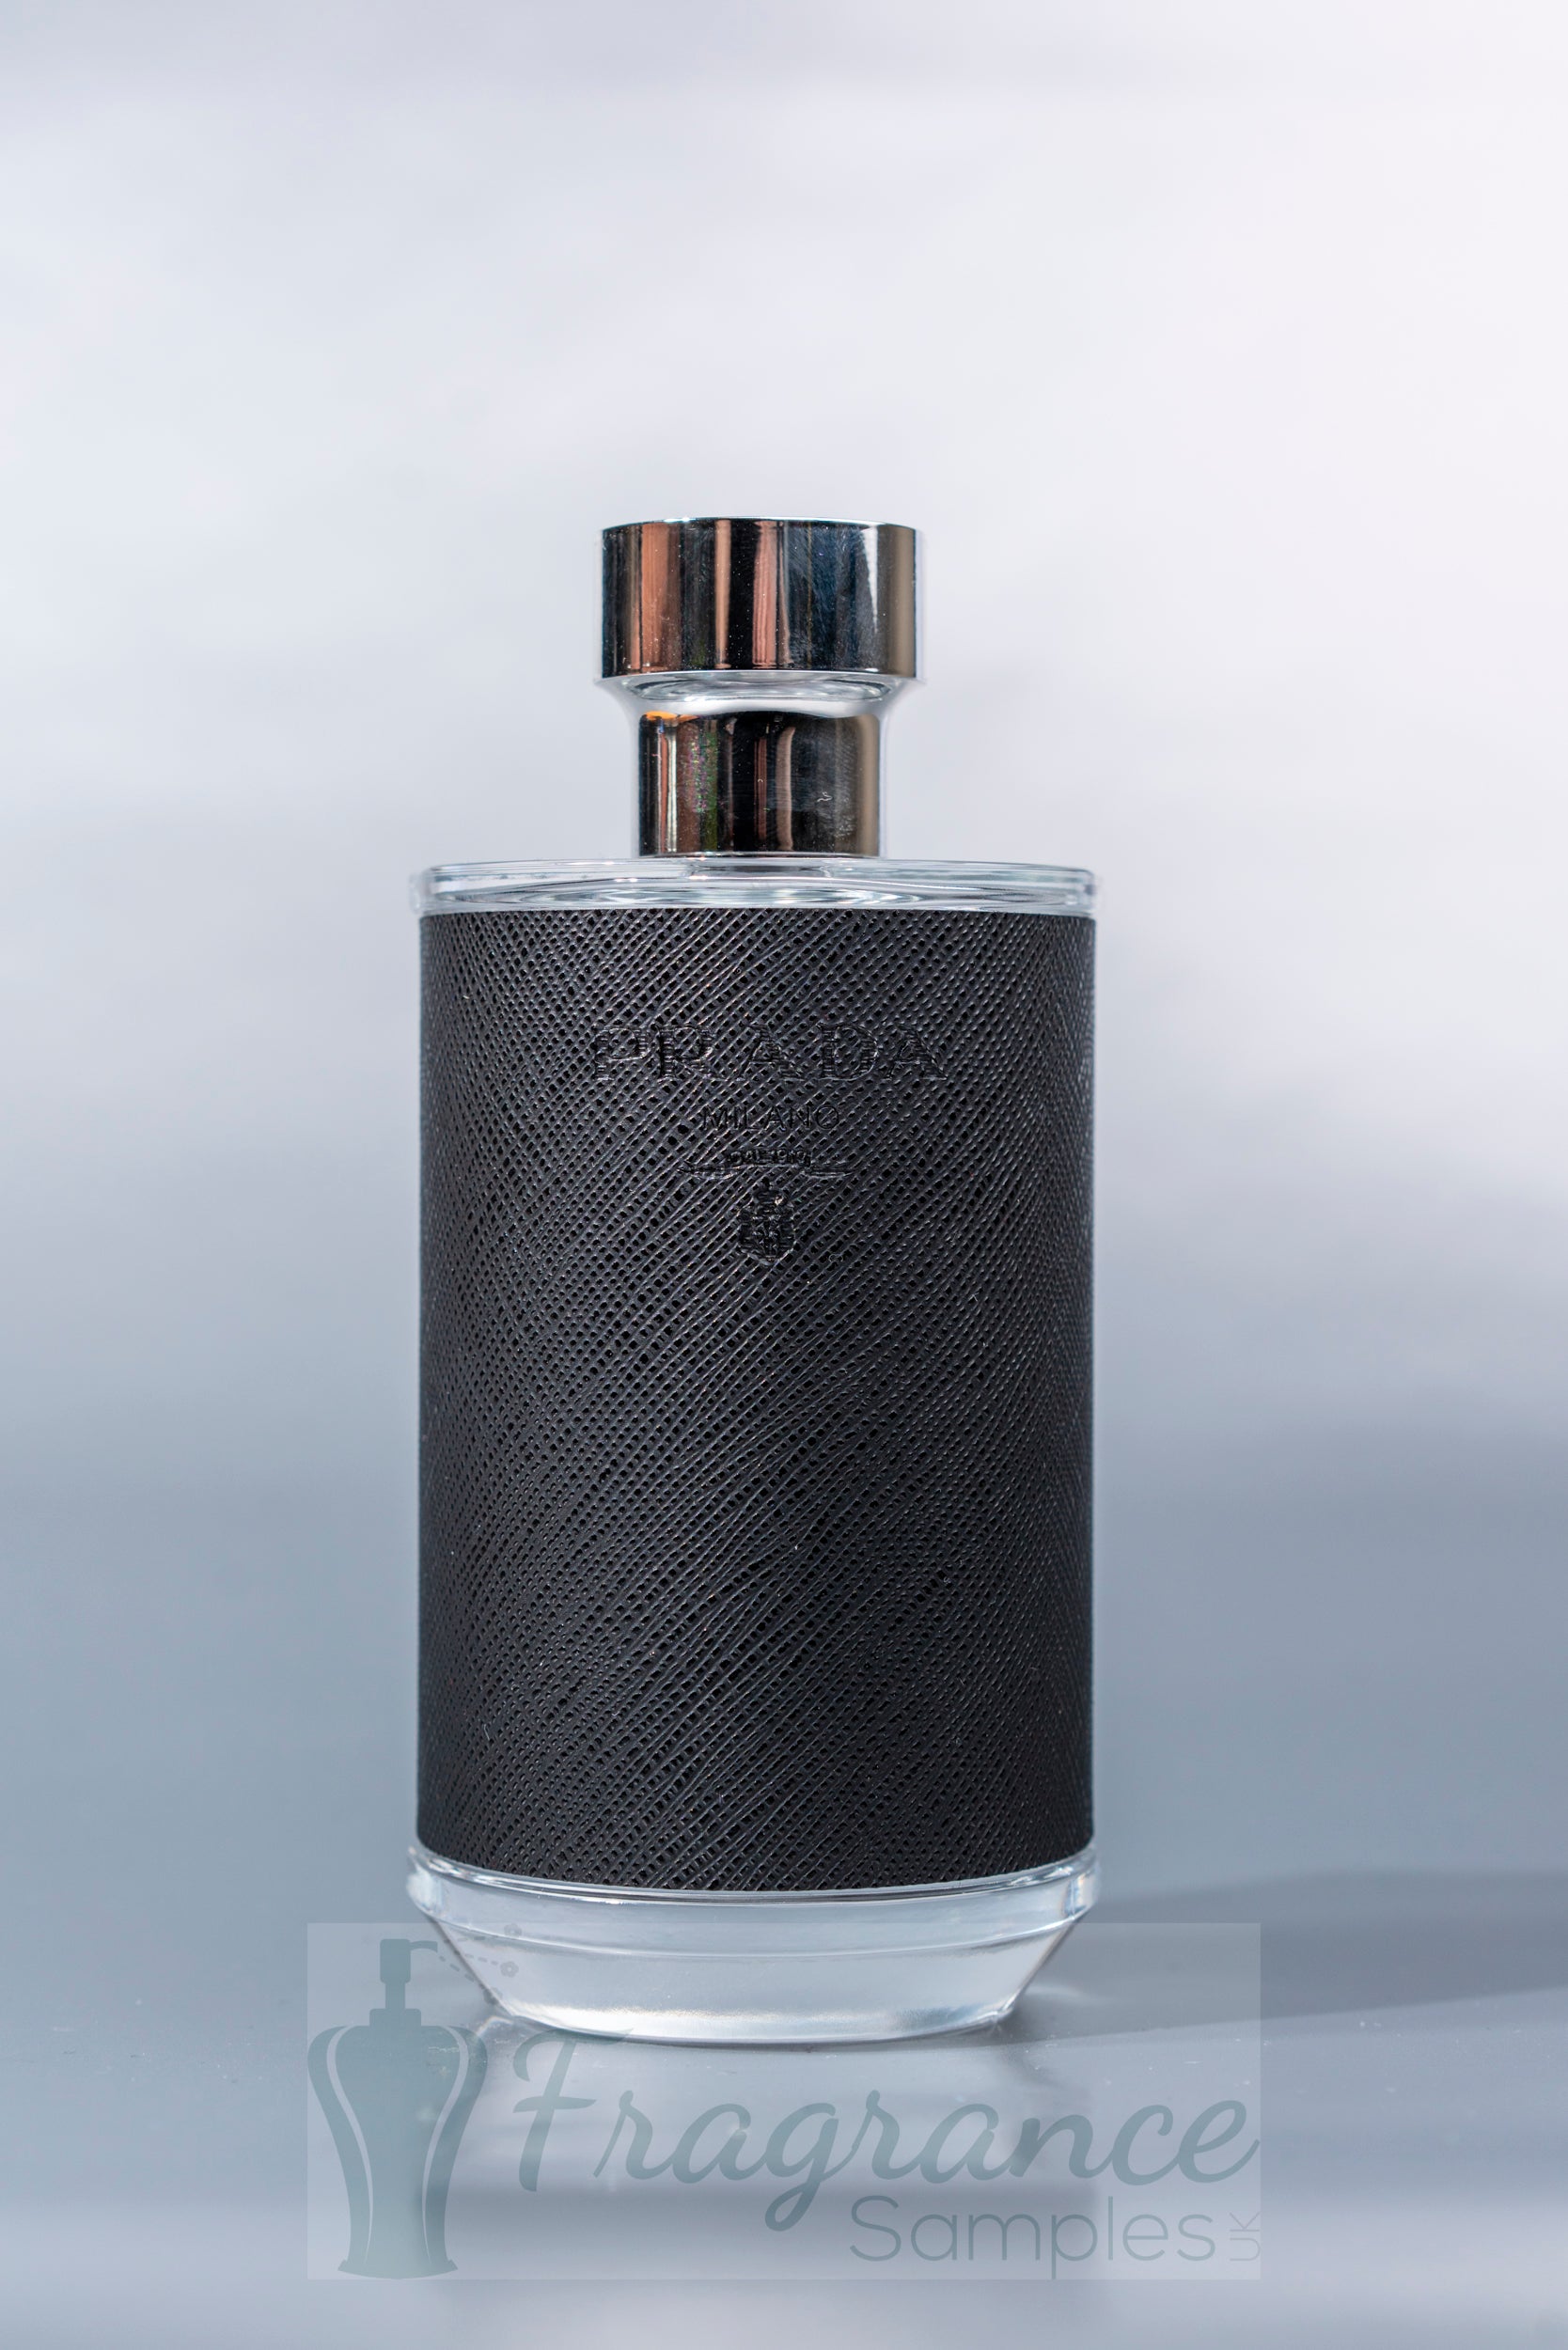 Prada L'Homme – Fragrance Samples UK